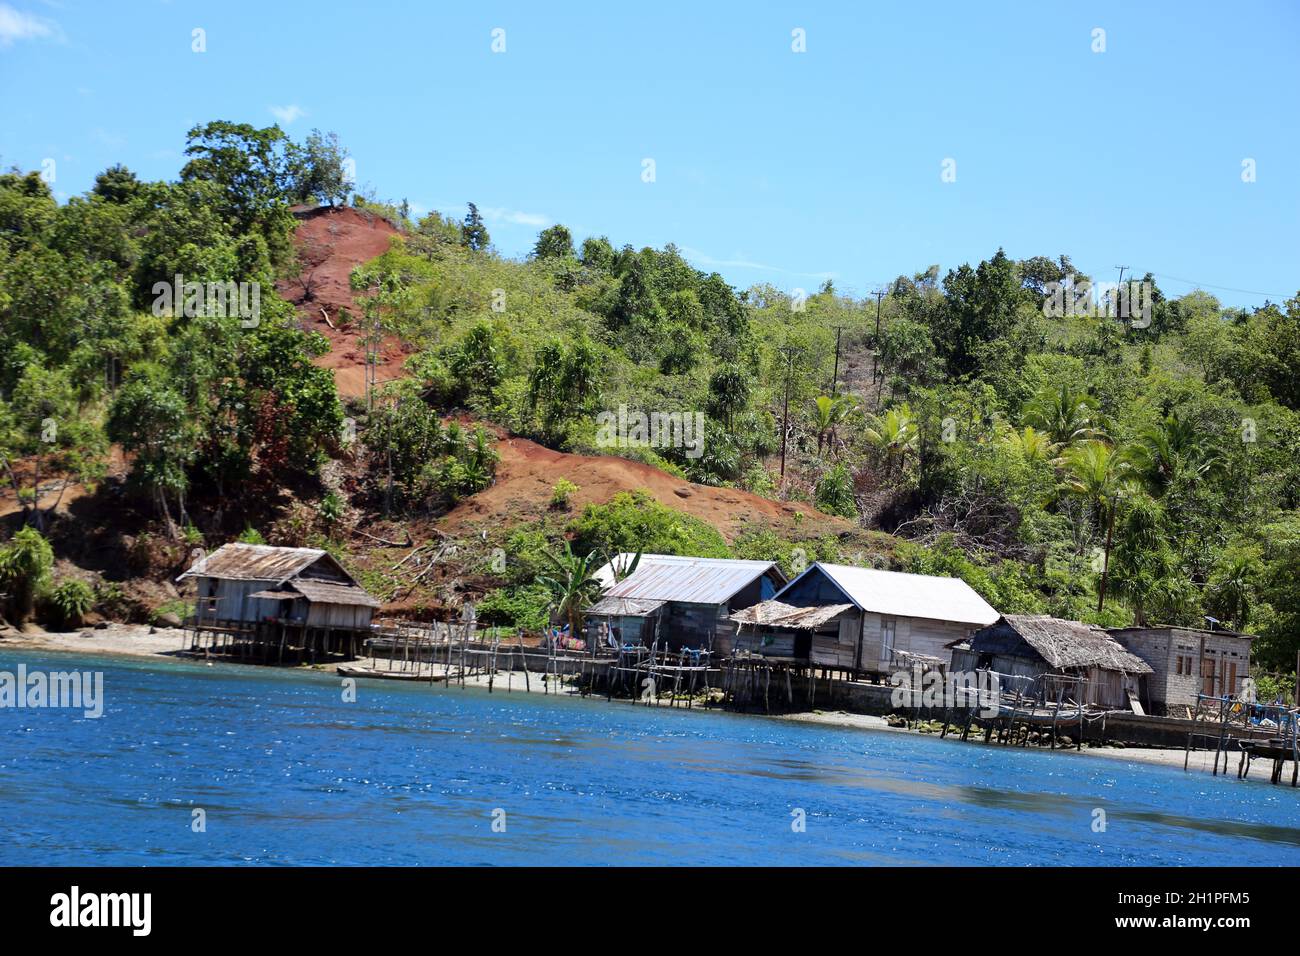 kleines, namenloses Fischerdorf auf der Insel Muari, Nordmolukken, Halmahera, Indonesien Stock Photo